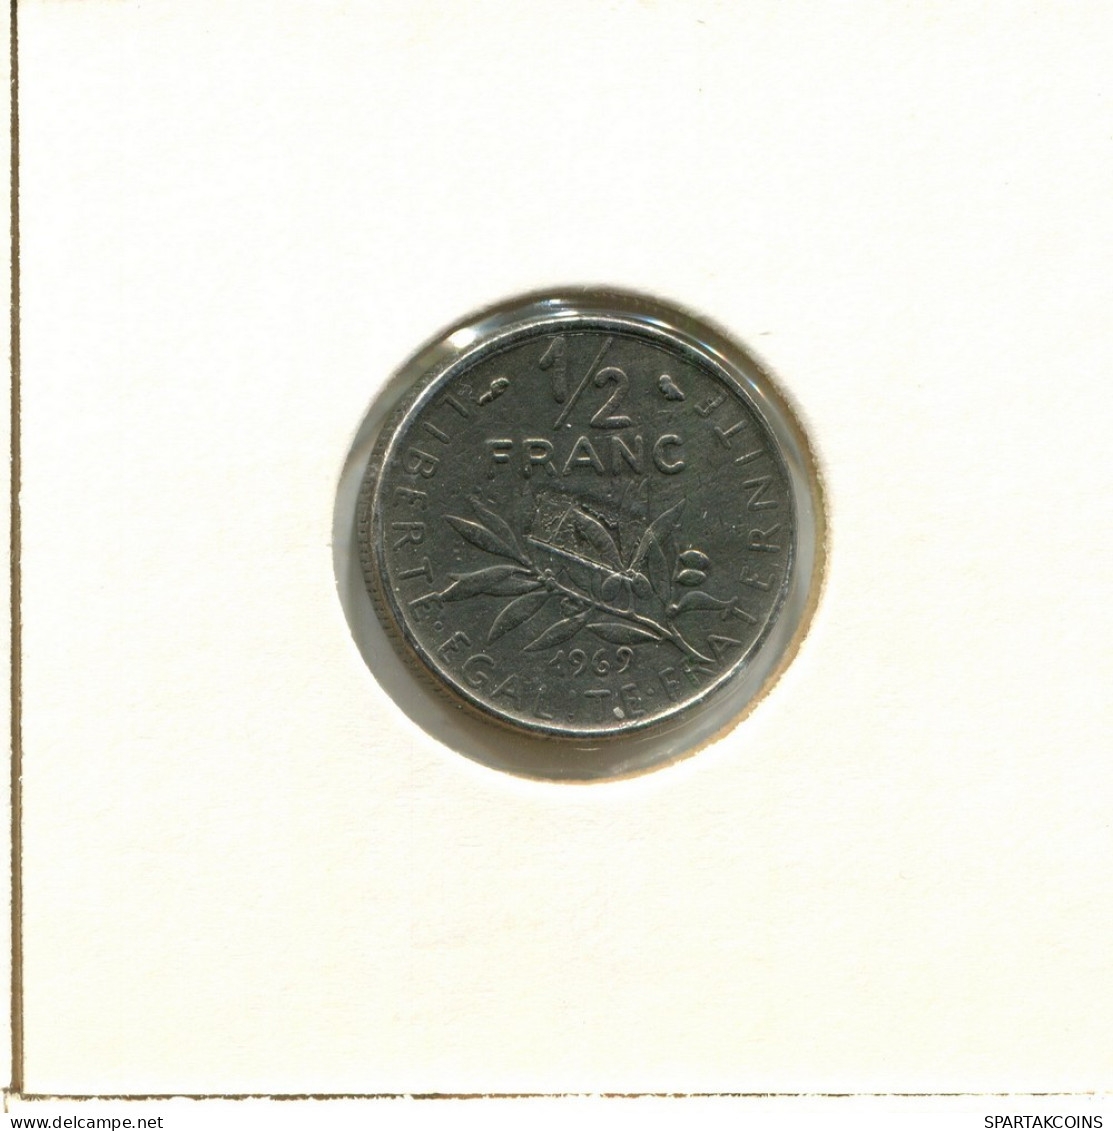 1/2 FRANC 1969 FRANKREICH FRANCE Französisch Münze #BB520.D.A - 1/2 Franc